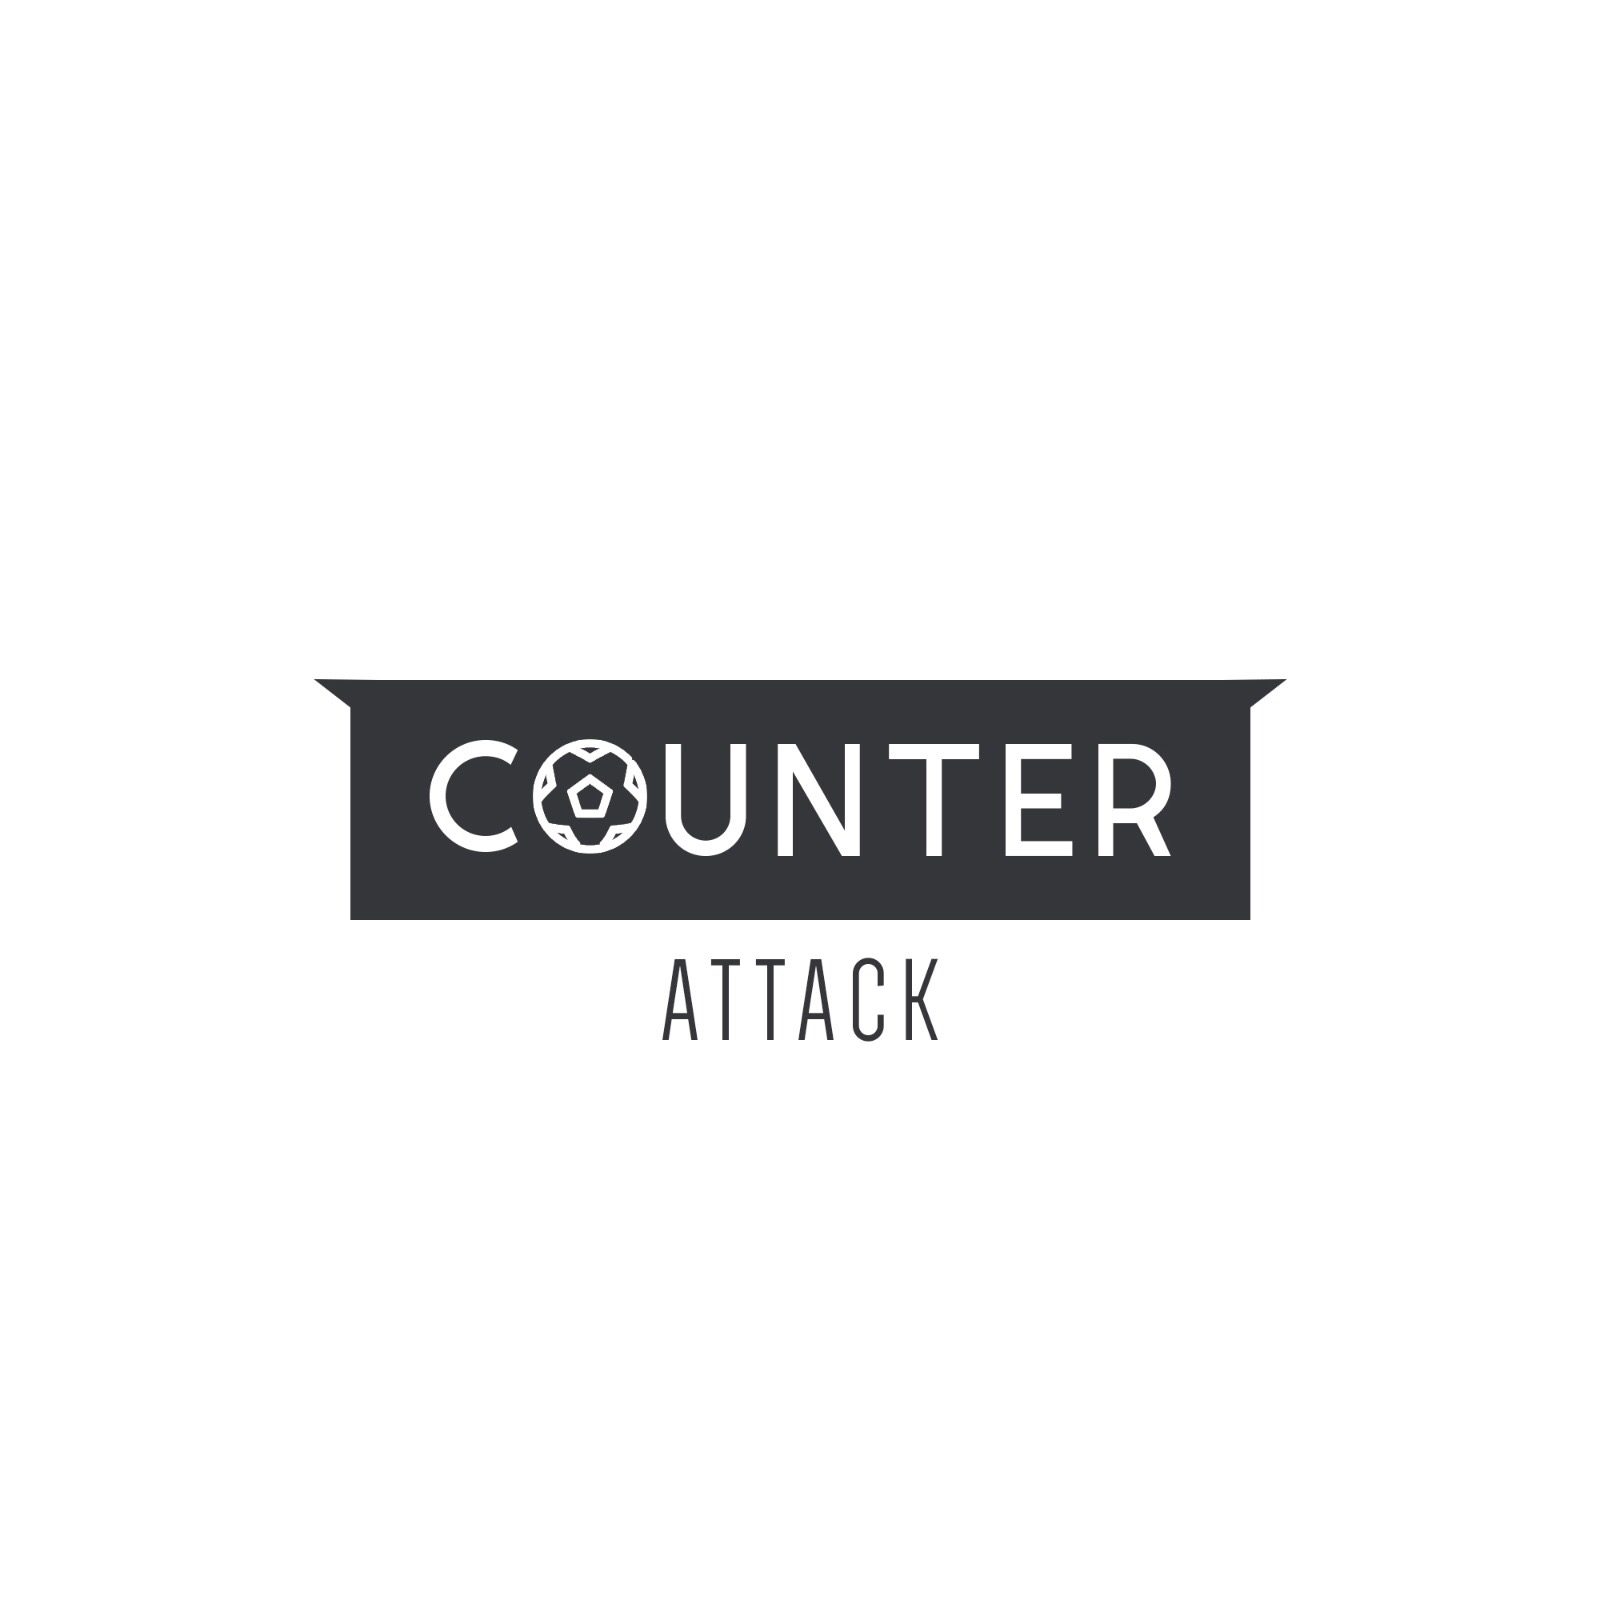 Counter Attack - Episode 71 - Pogba Media Treatment Causing Move Away?